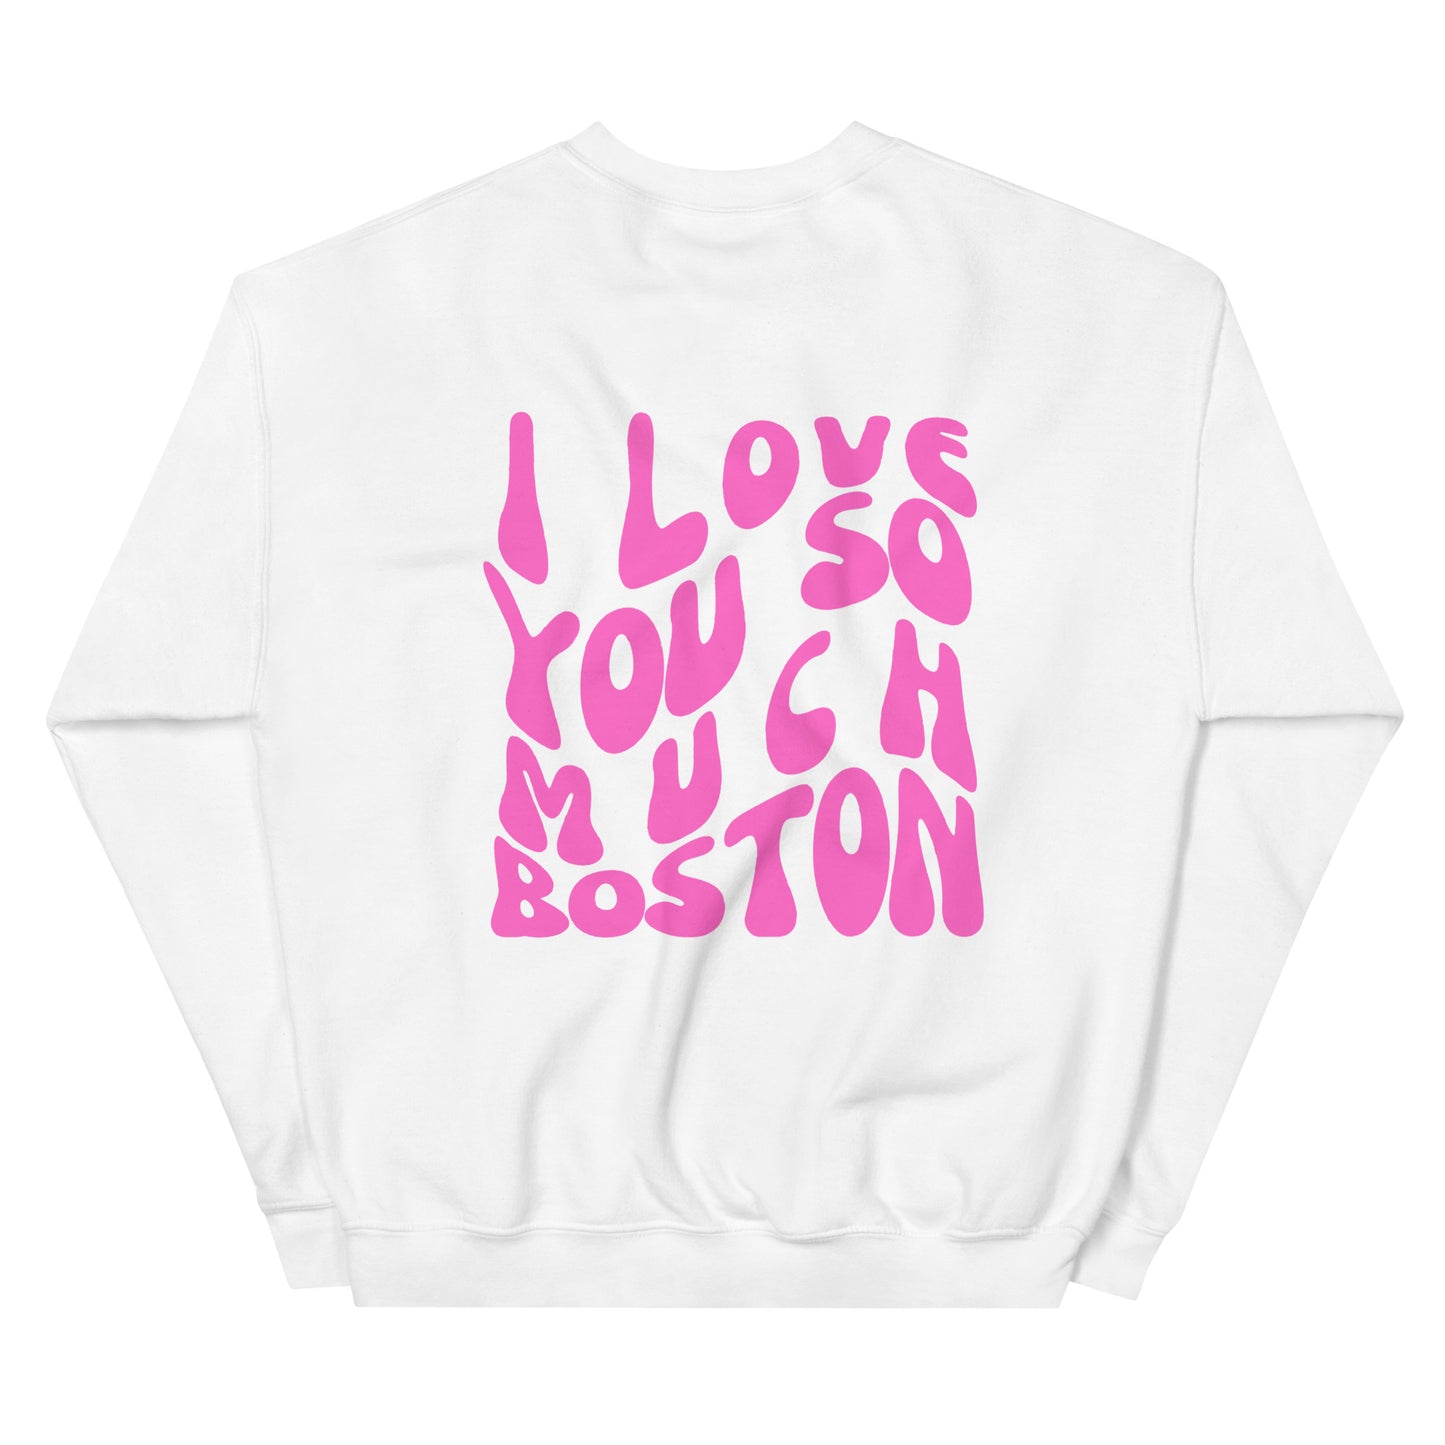 I LOVE YOU SO MUCH BOSTON Crewneck Sweatshirt